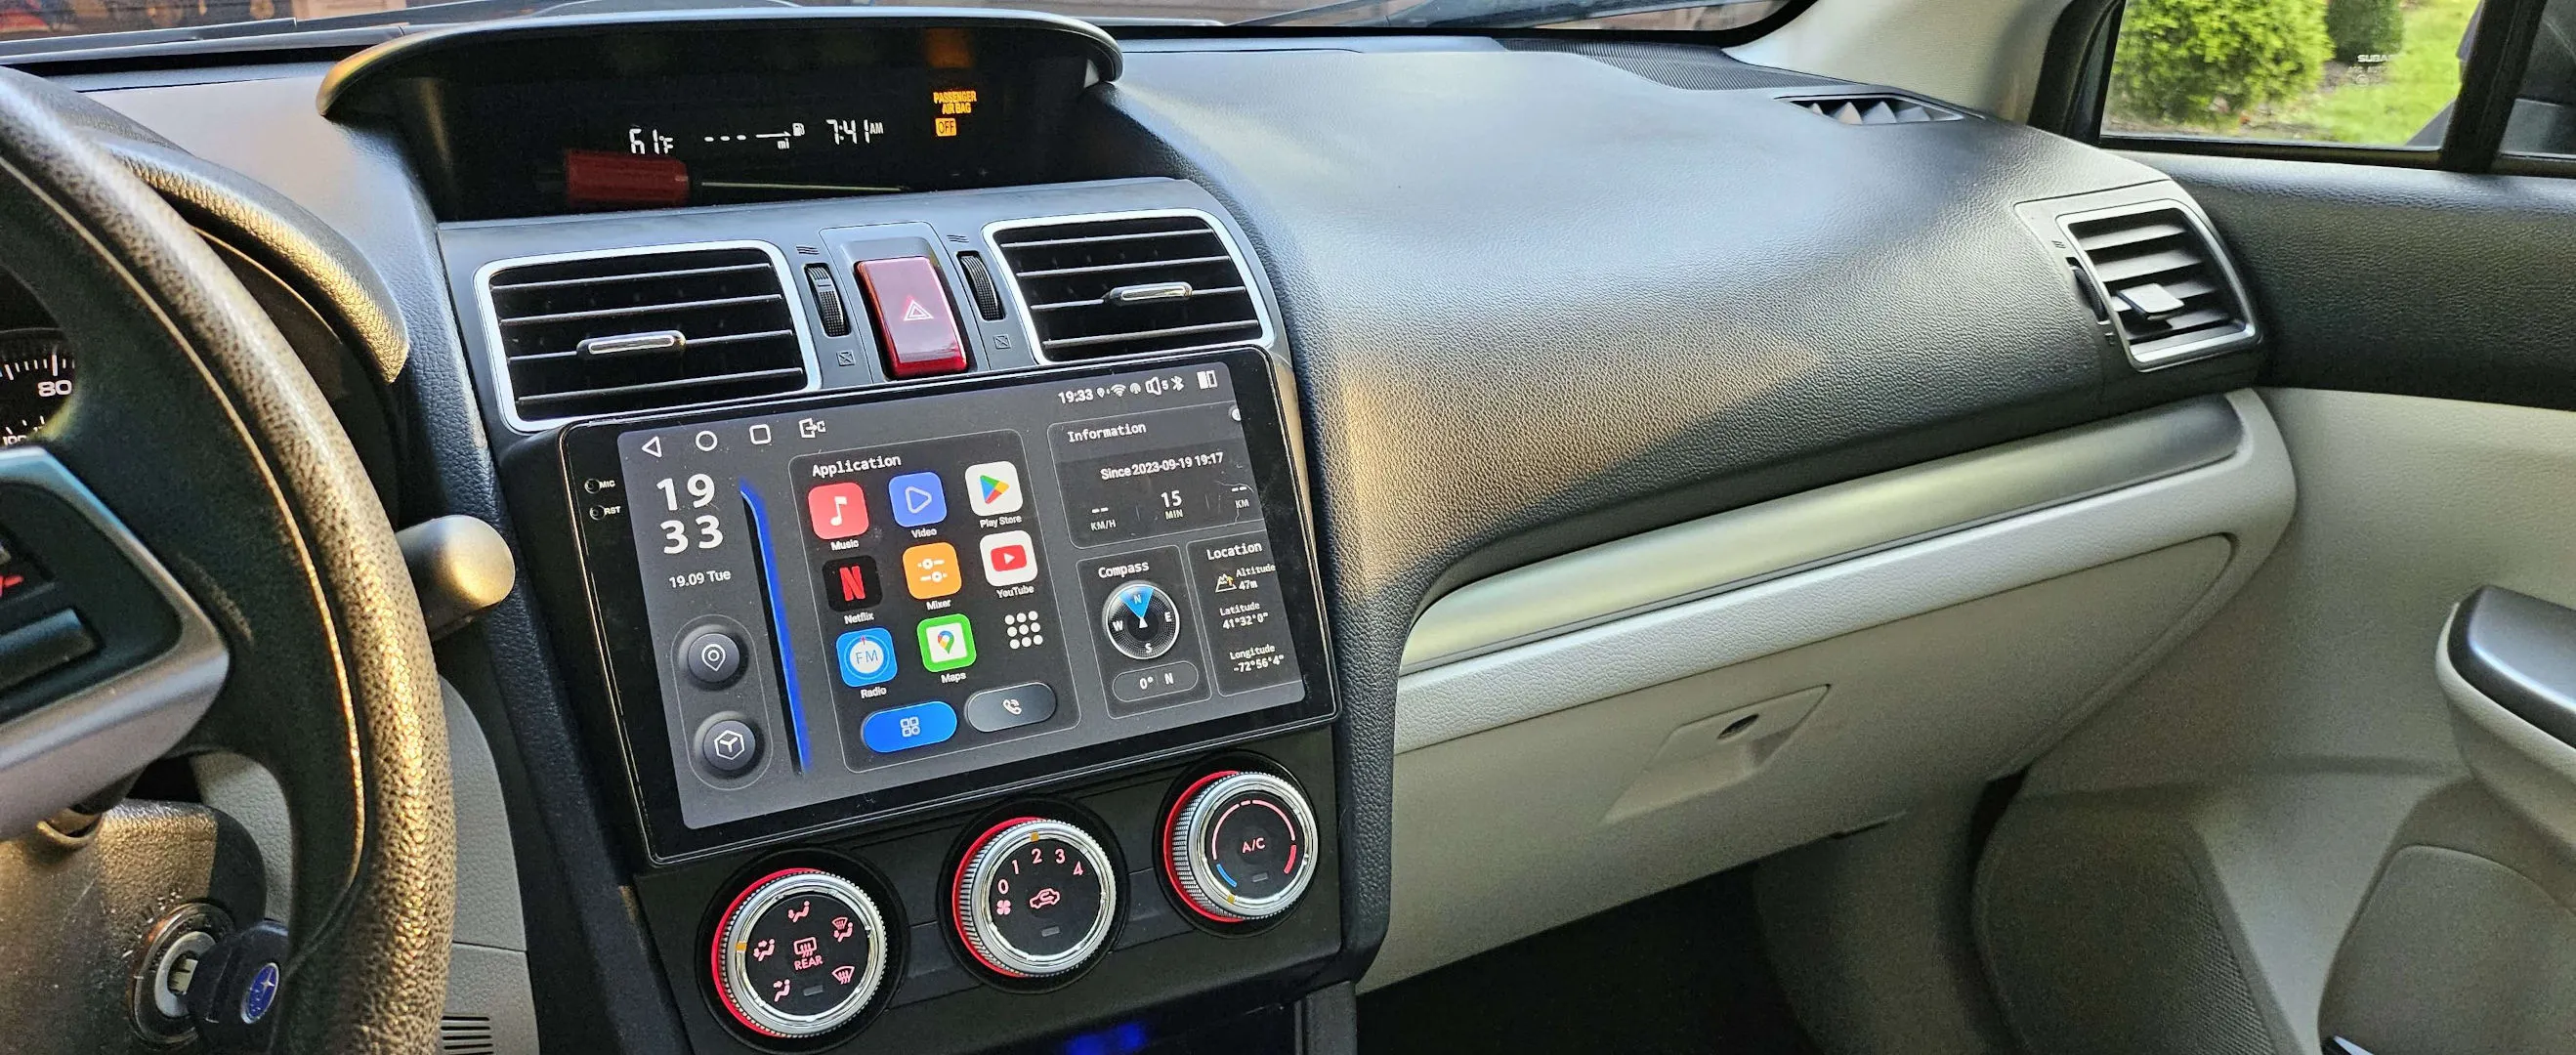 Idoing 9inch Car Stereo Radio Multimedia Player 2K For Subaru WRX 2016-2021 GPS Navigation Carplay AndroidAuto Head Unit 360 Panorama